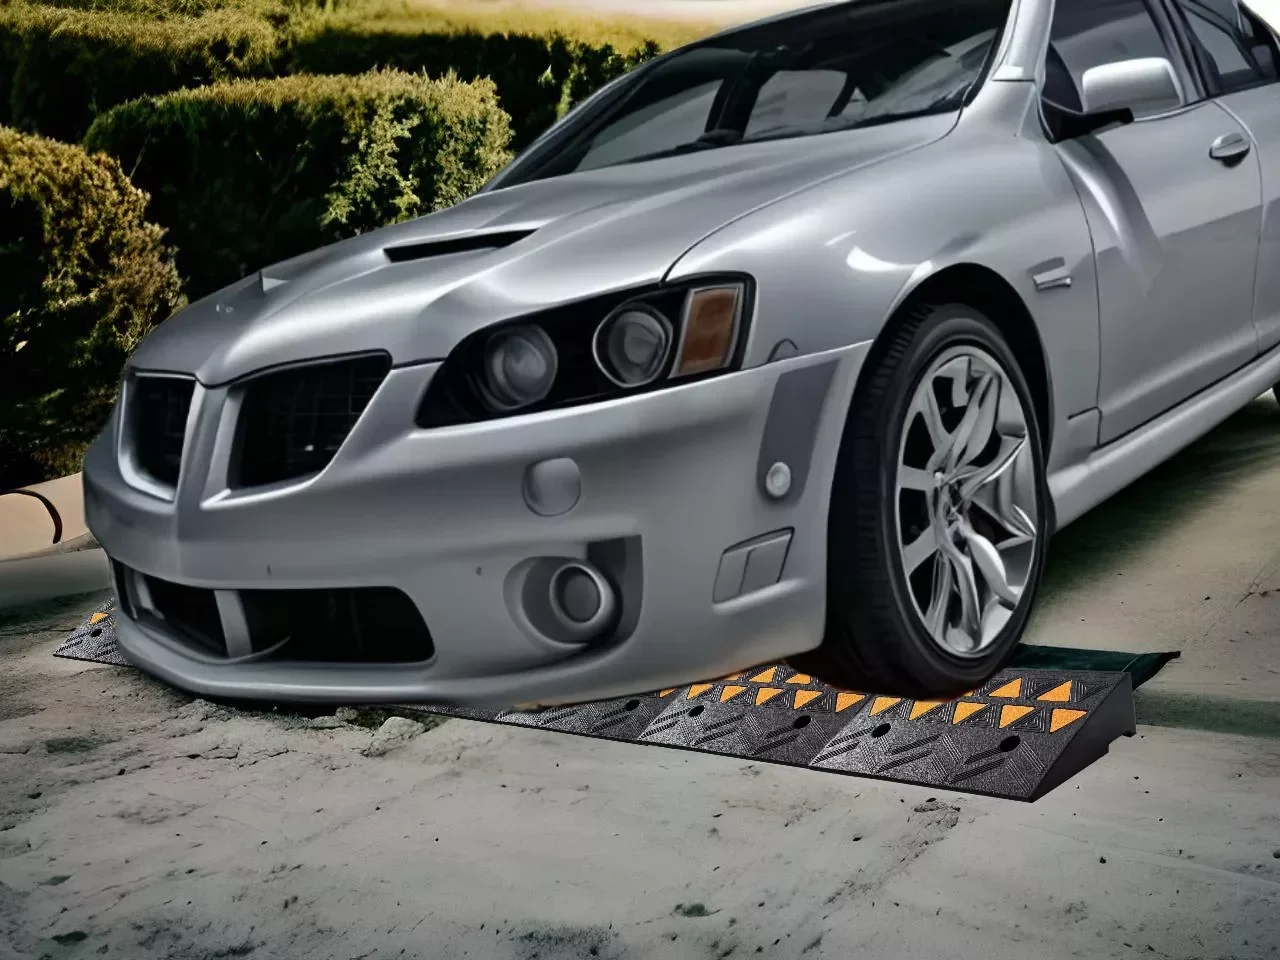 Curb ramp solution for low cars; sizes: 40"L x 10"W x 2"H & 40"L x 10"W x 3.75"H